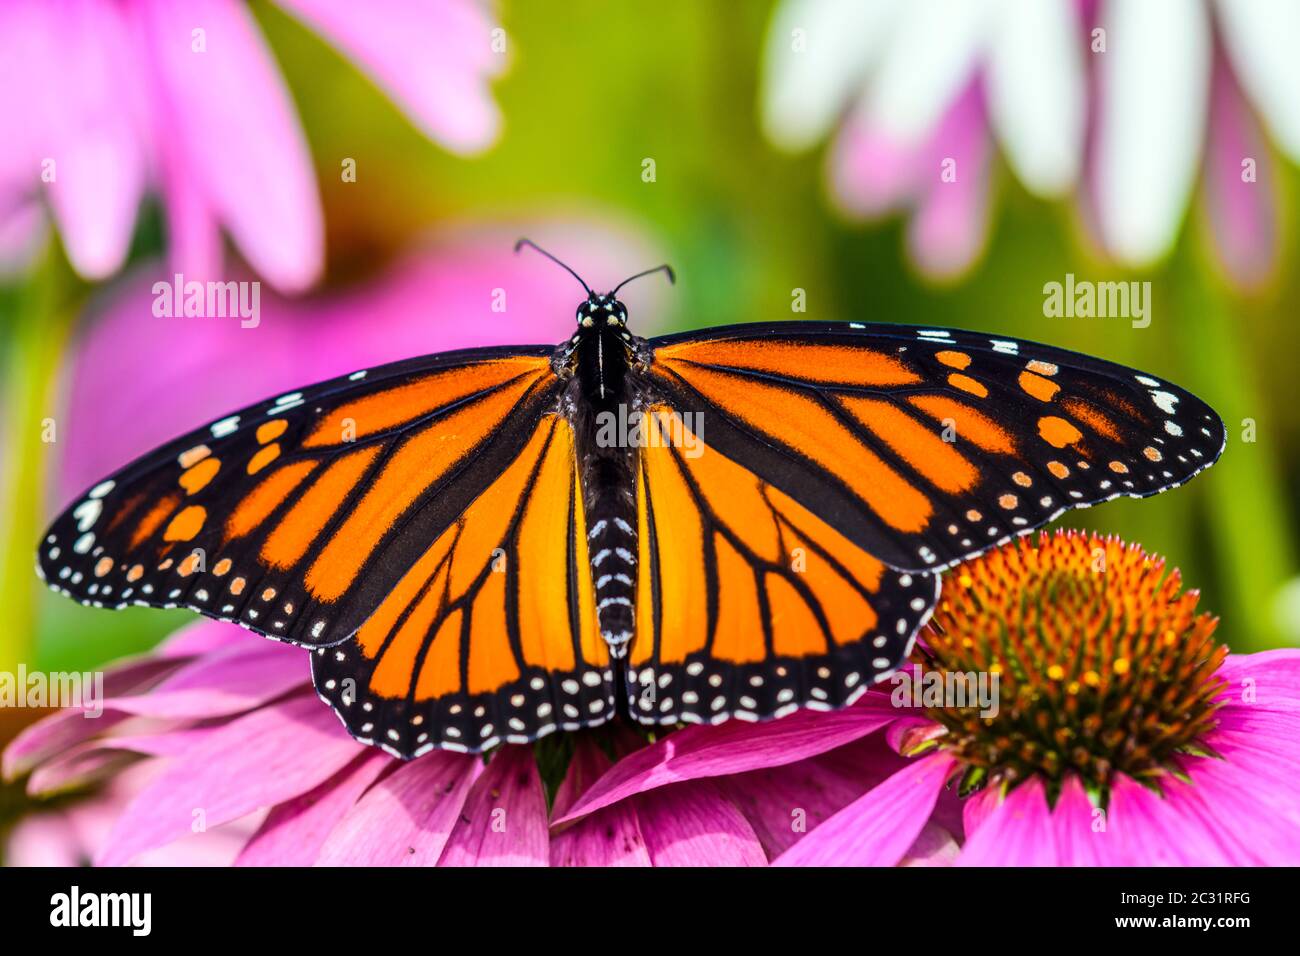 Mariposa monarca (Danuas plexippus) que nectaren un jardín de flores, Gran Sudbury, Ontario, Canadá Foto de stock